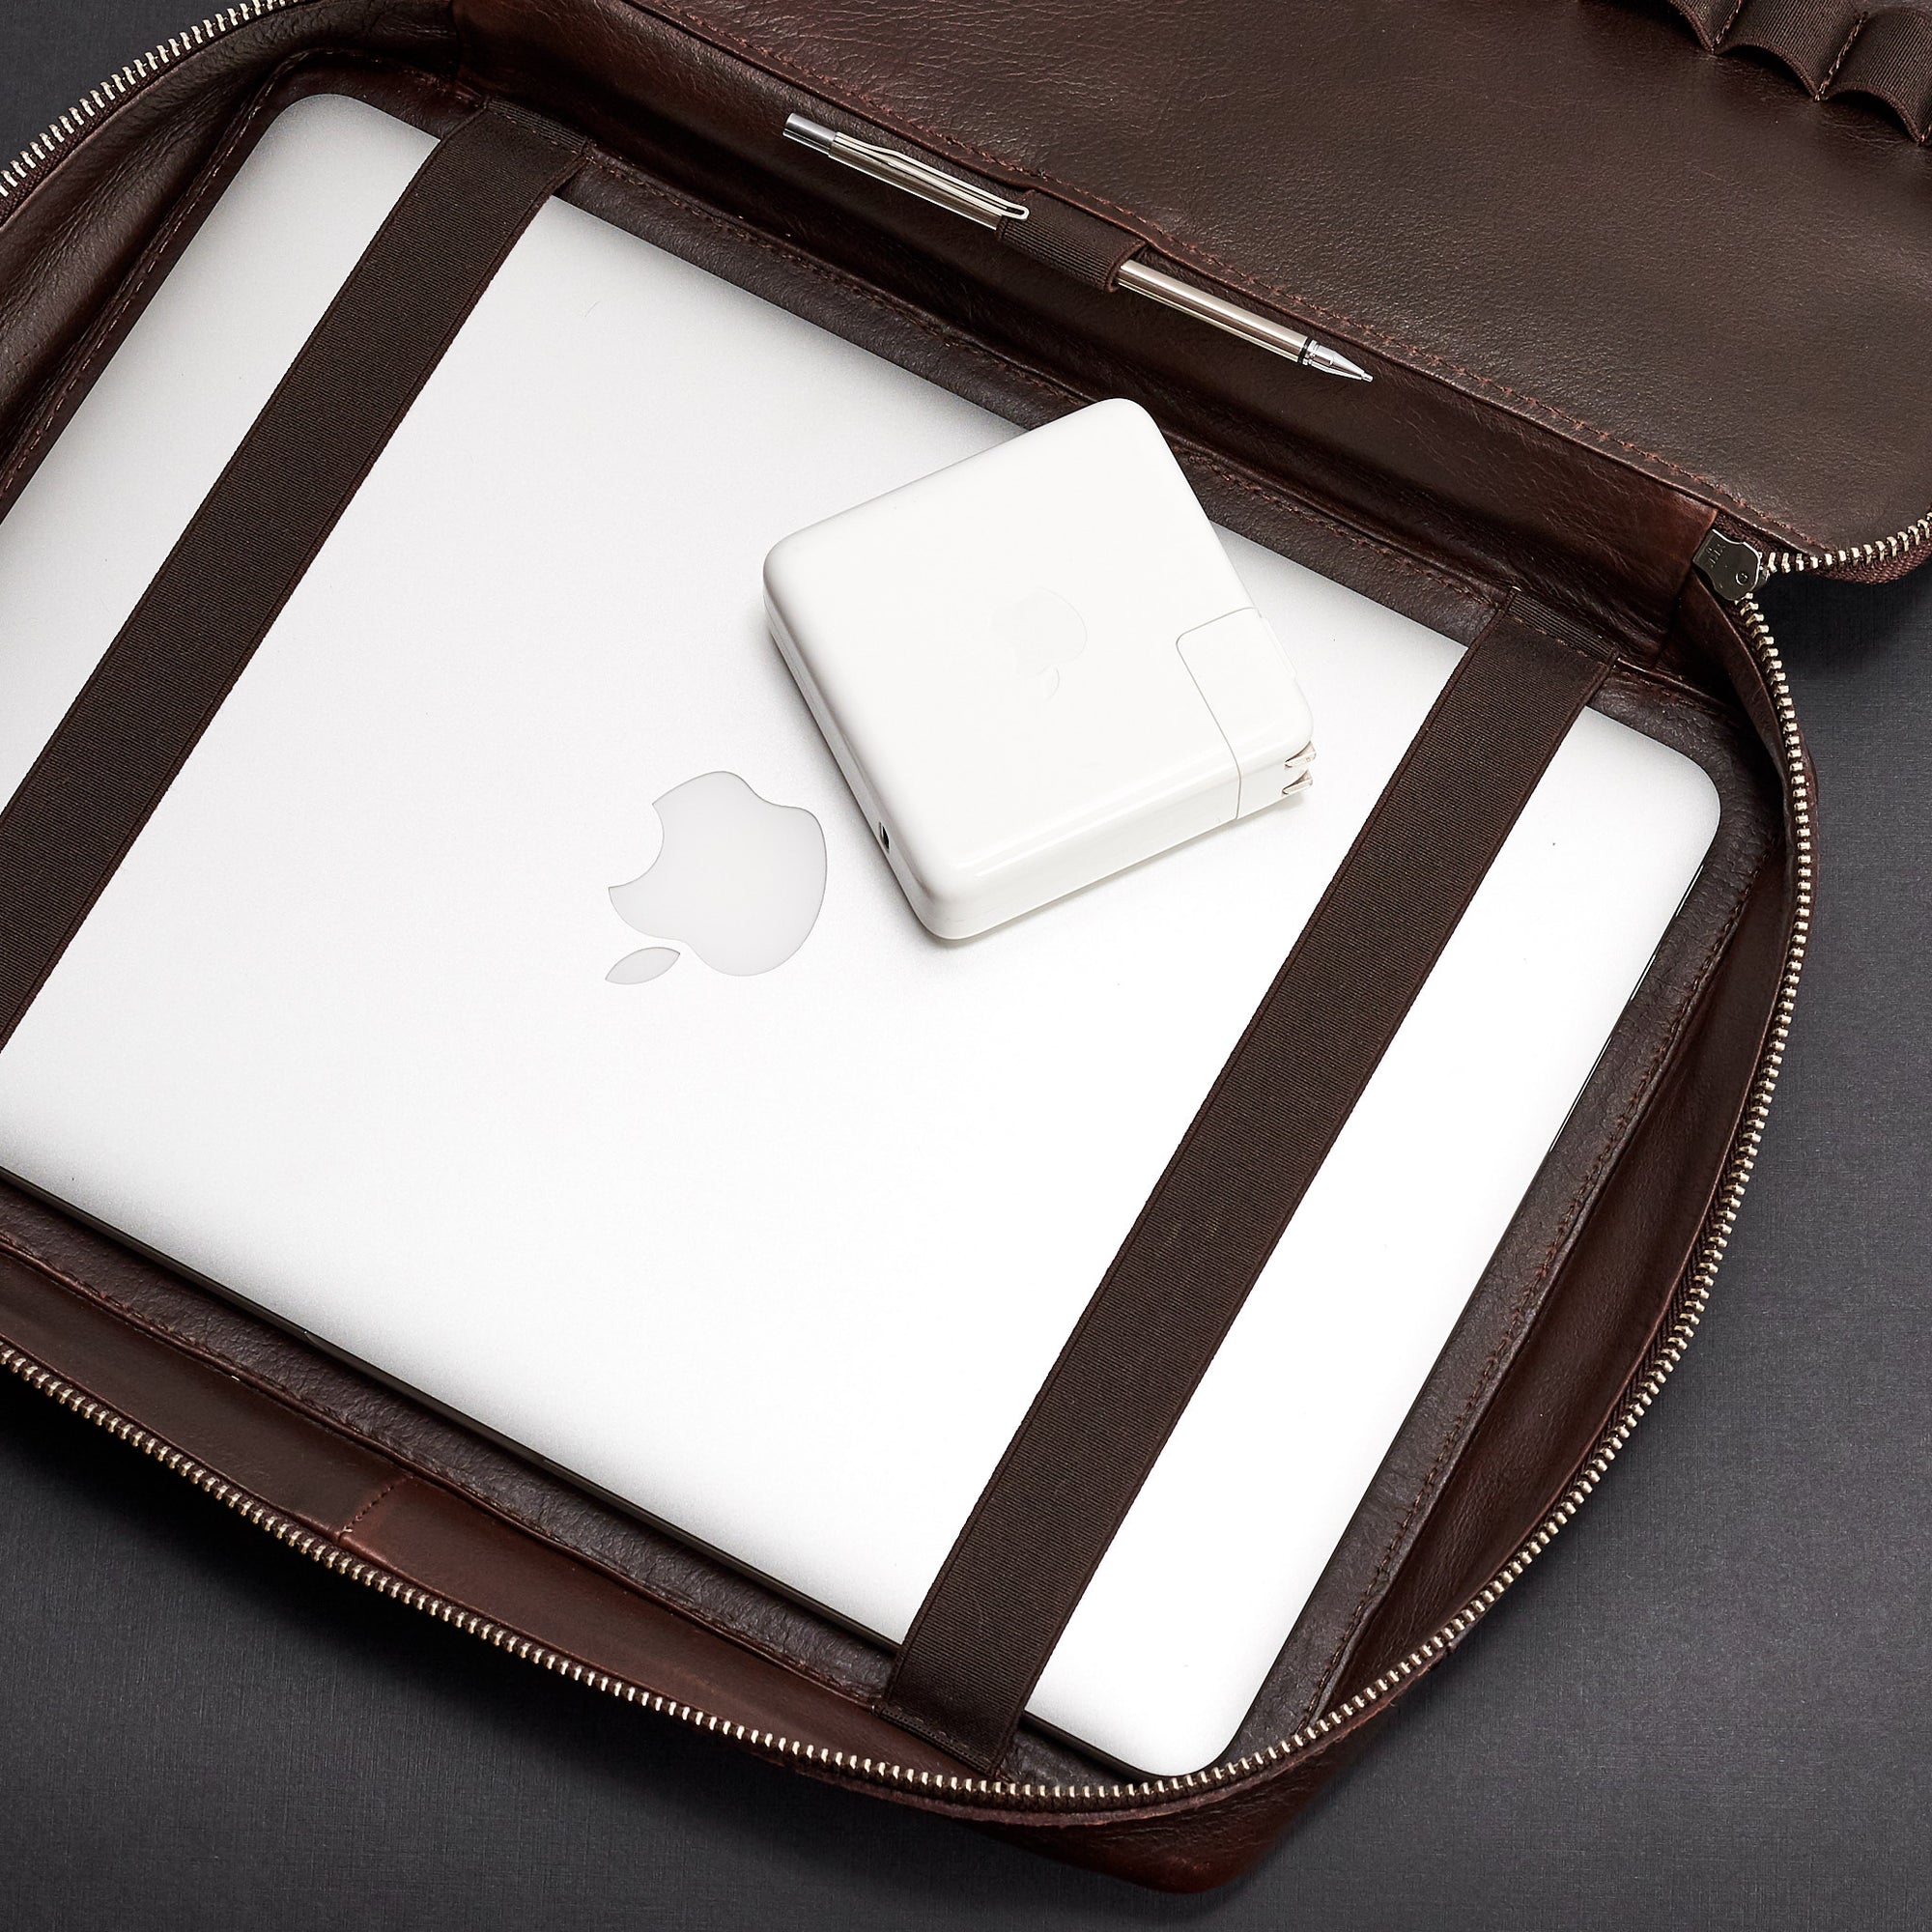 MacBook Pro gear bag. Best tech travel bag dark brown by Capra Leather